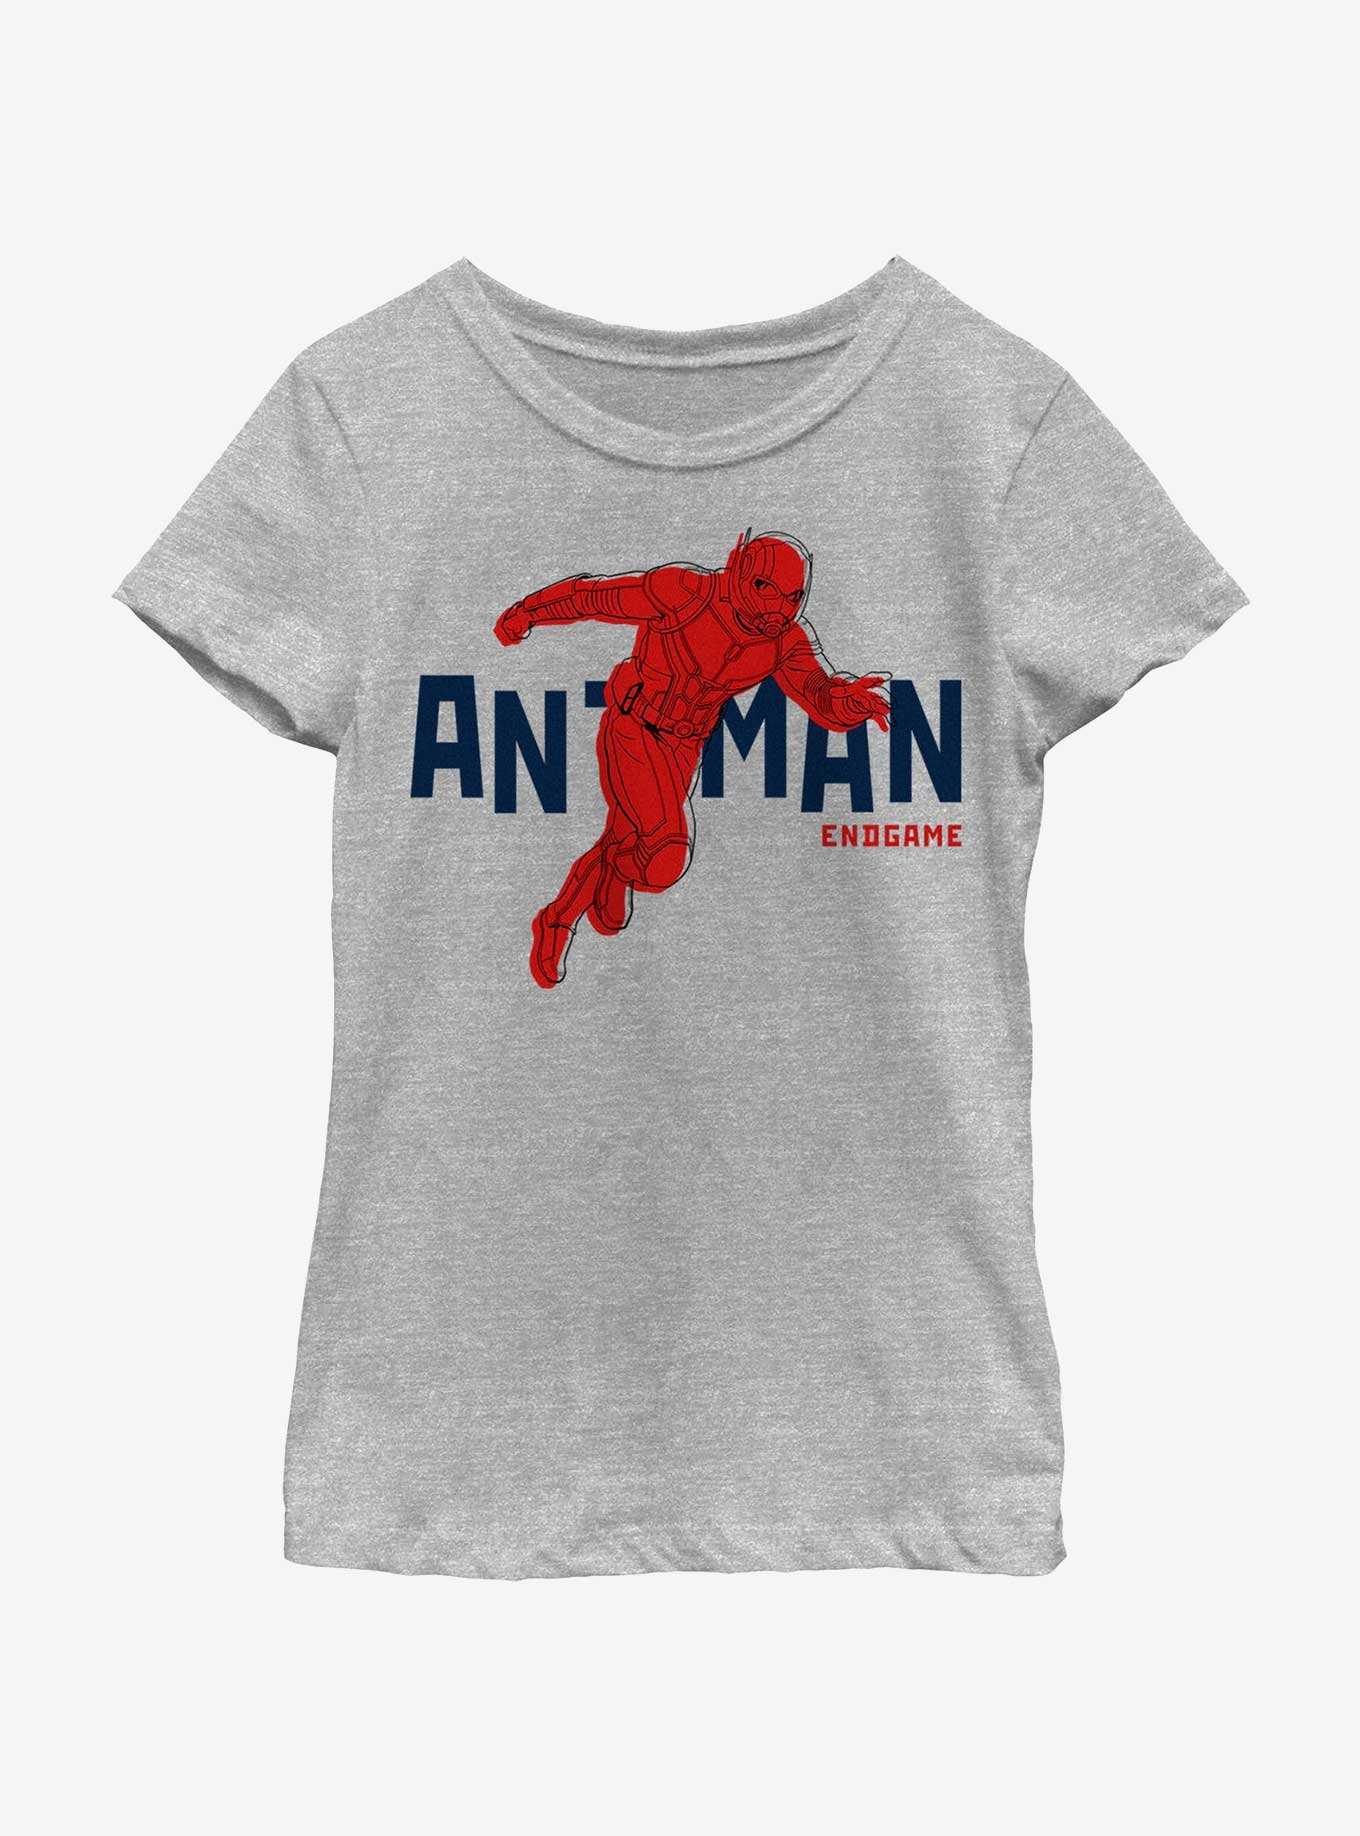 Marvel Ant-Man Text Pop Ant-Man Youth Girls T-Shirt, , hi-res